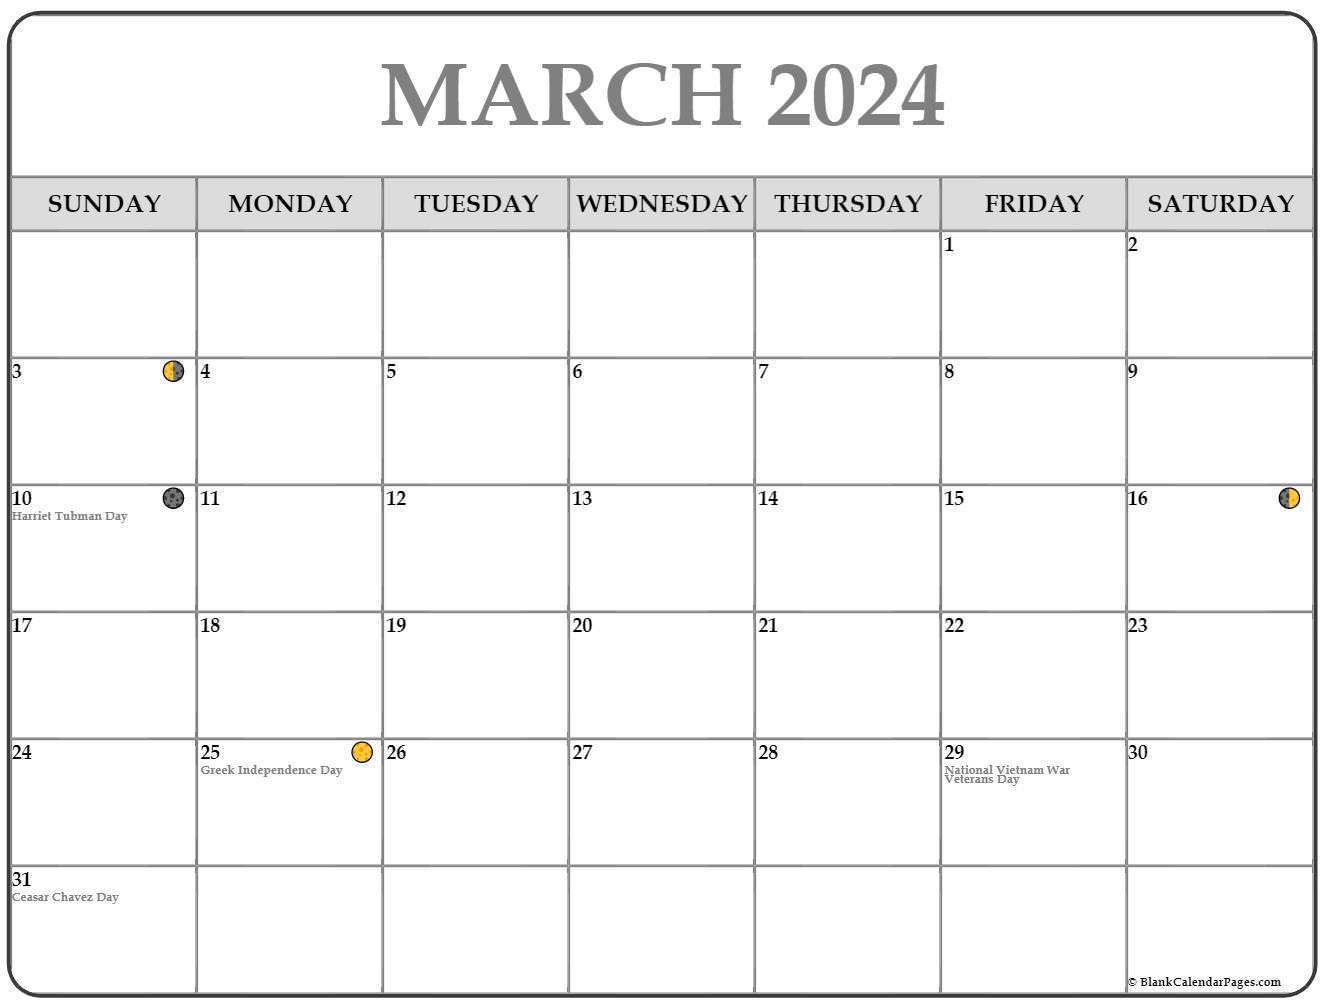 Moon Phase Calendar March 2022 March 2022 Lunar Calendar | Moon Phase Calendar